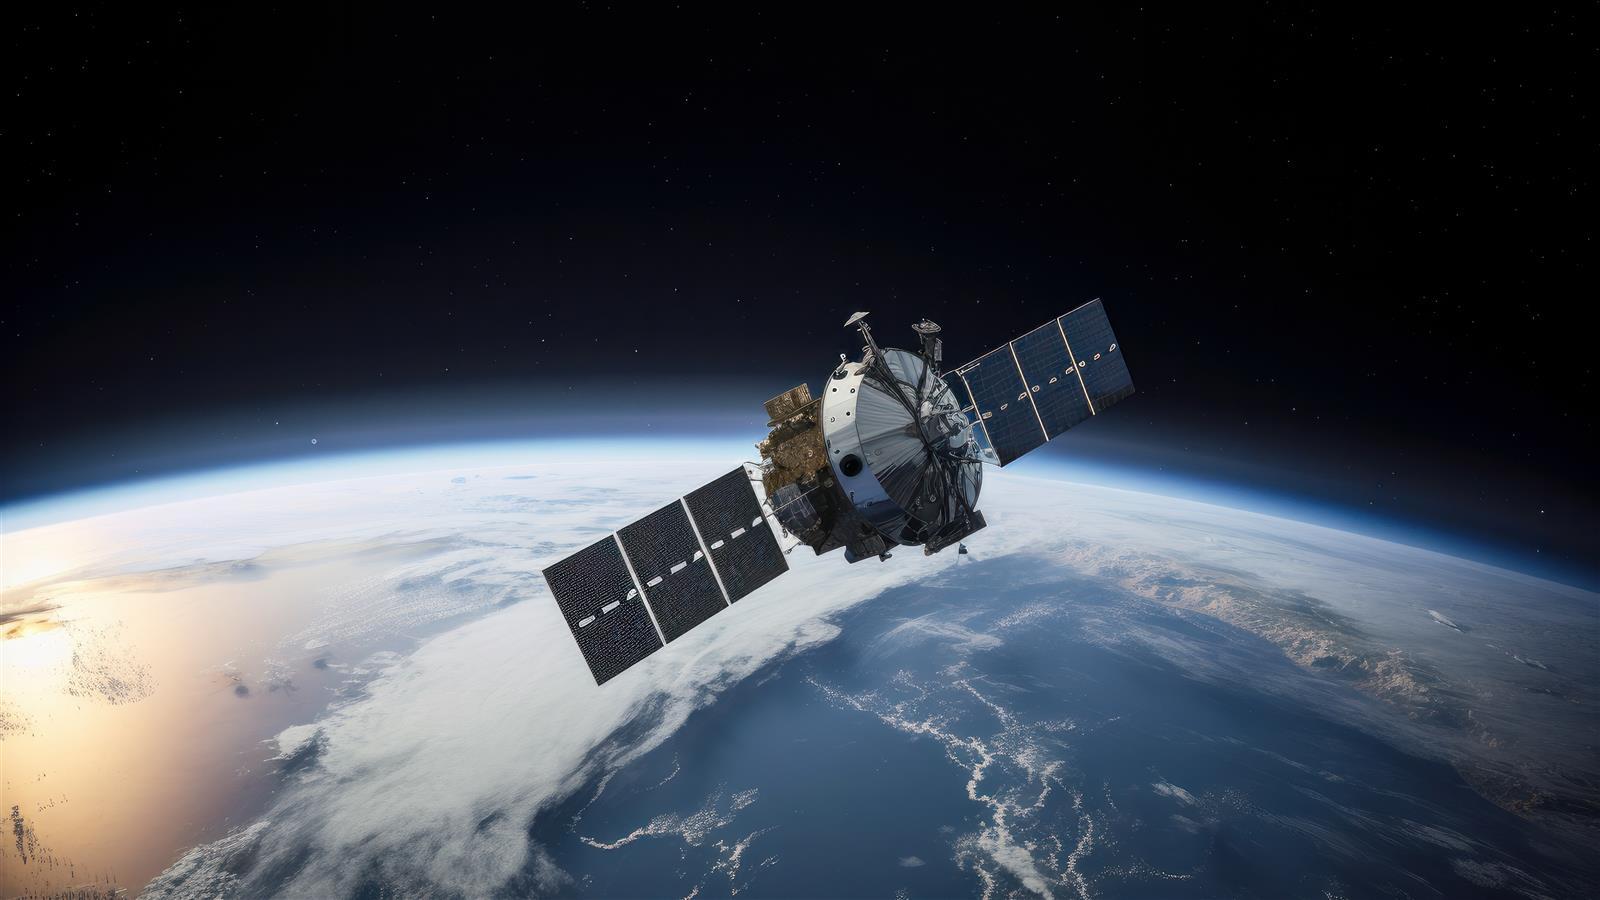 digital services - remote sensing satellite orbiting around Earth